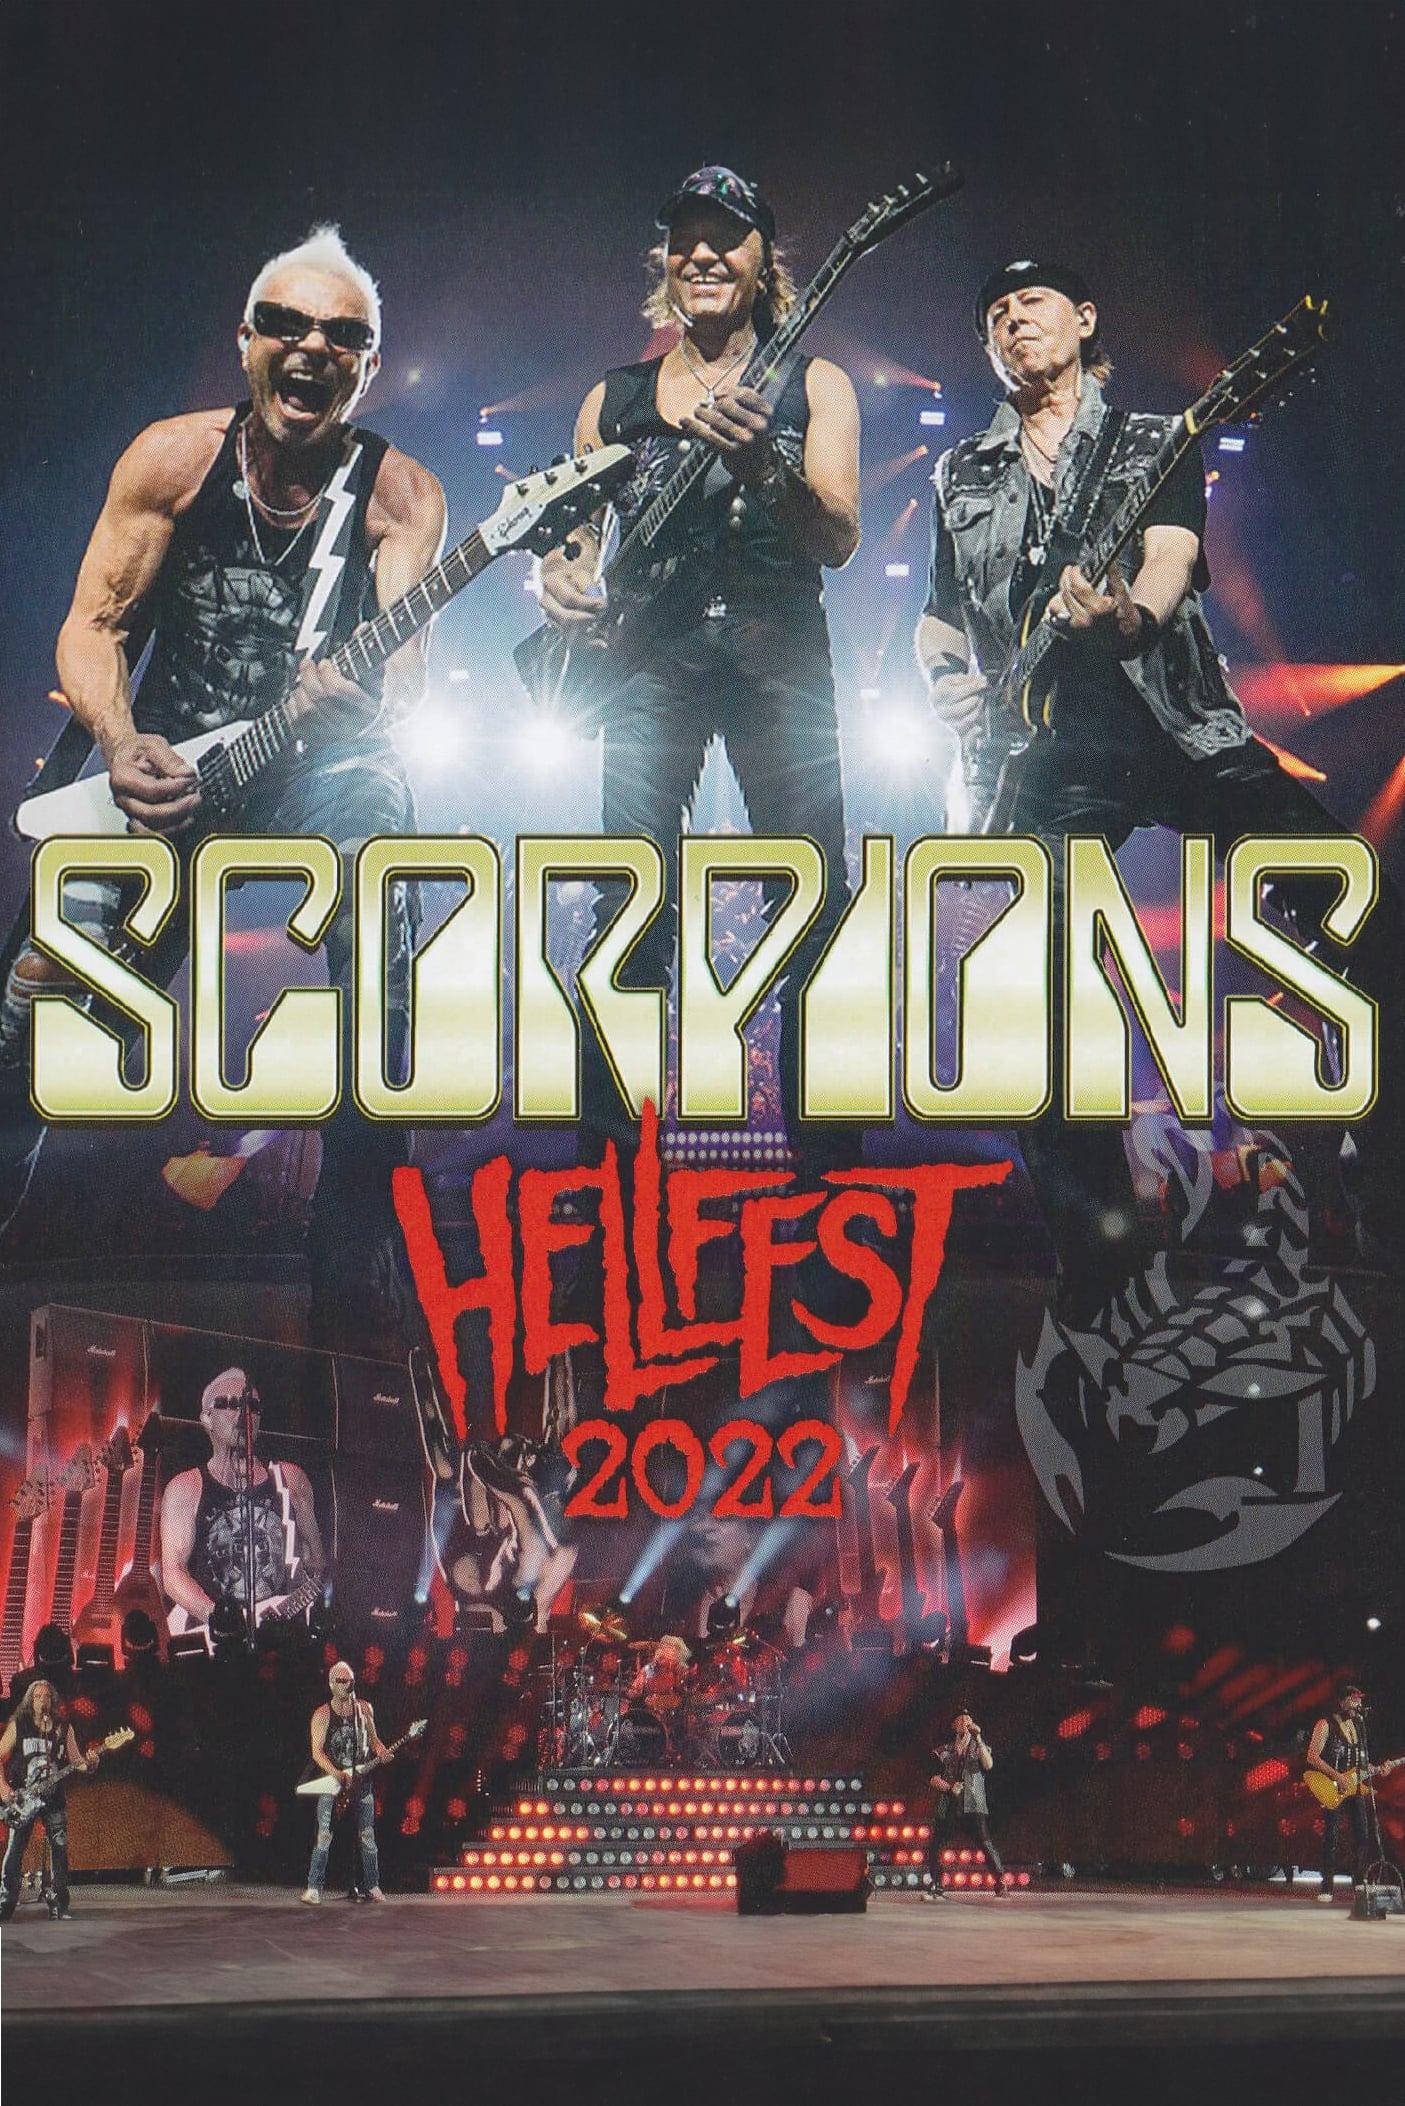 Scorpions - Hellfest 2022 poster